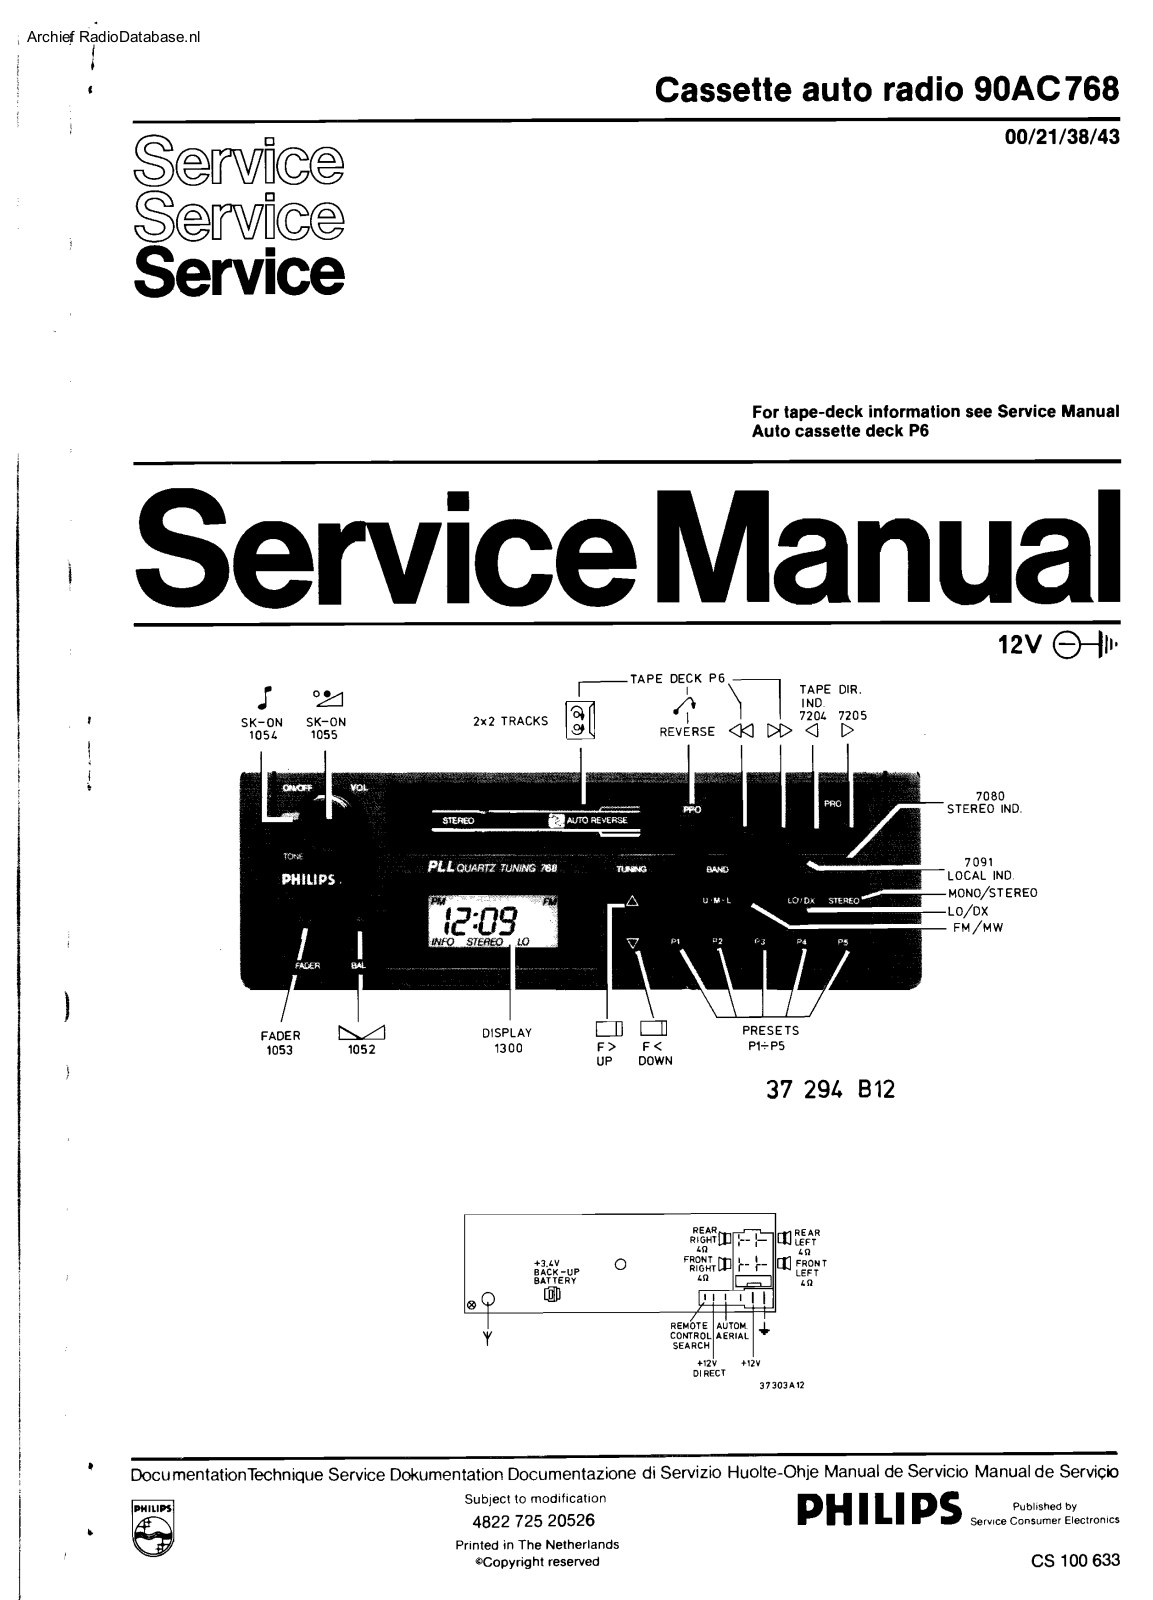 Philips 90-AC-768 Service Manual